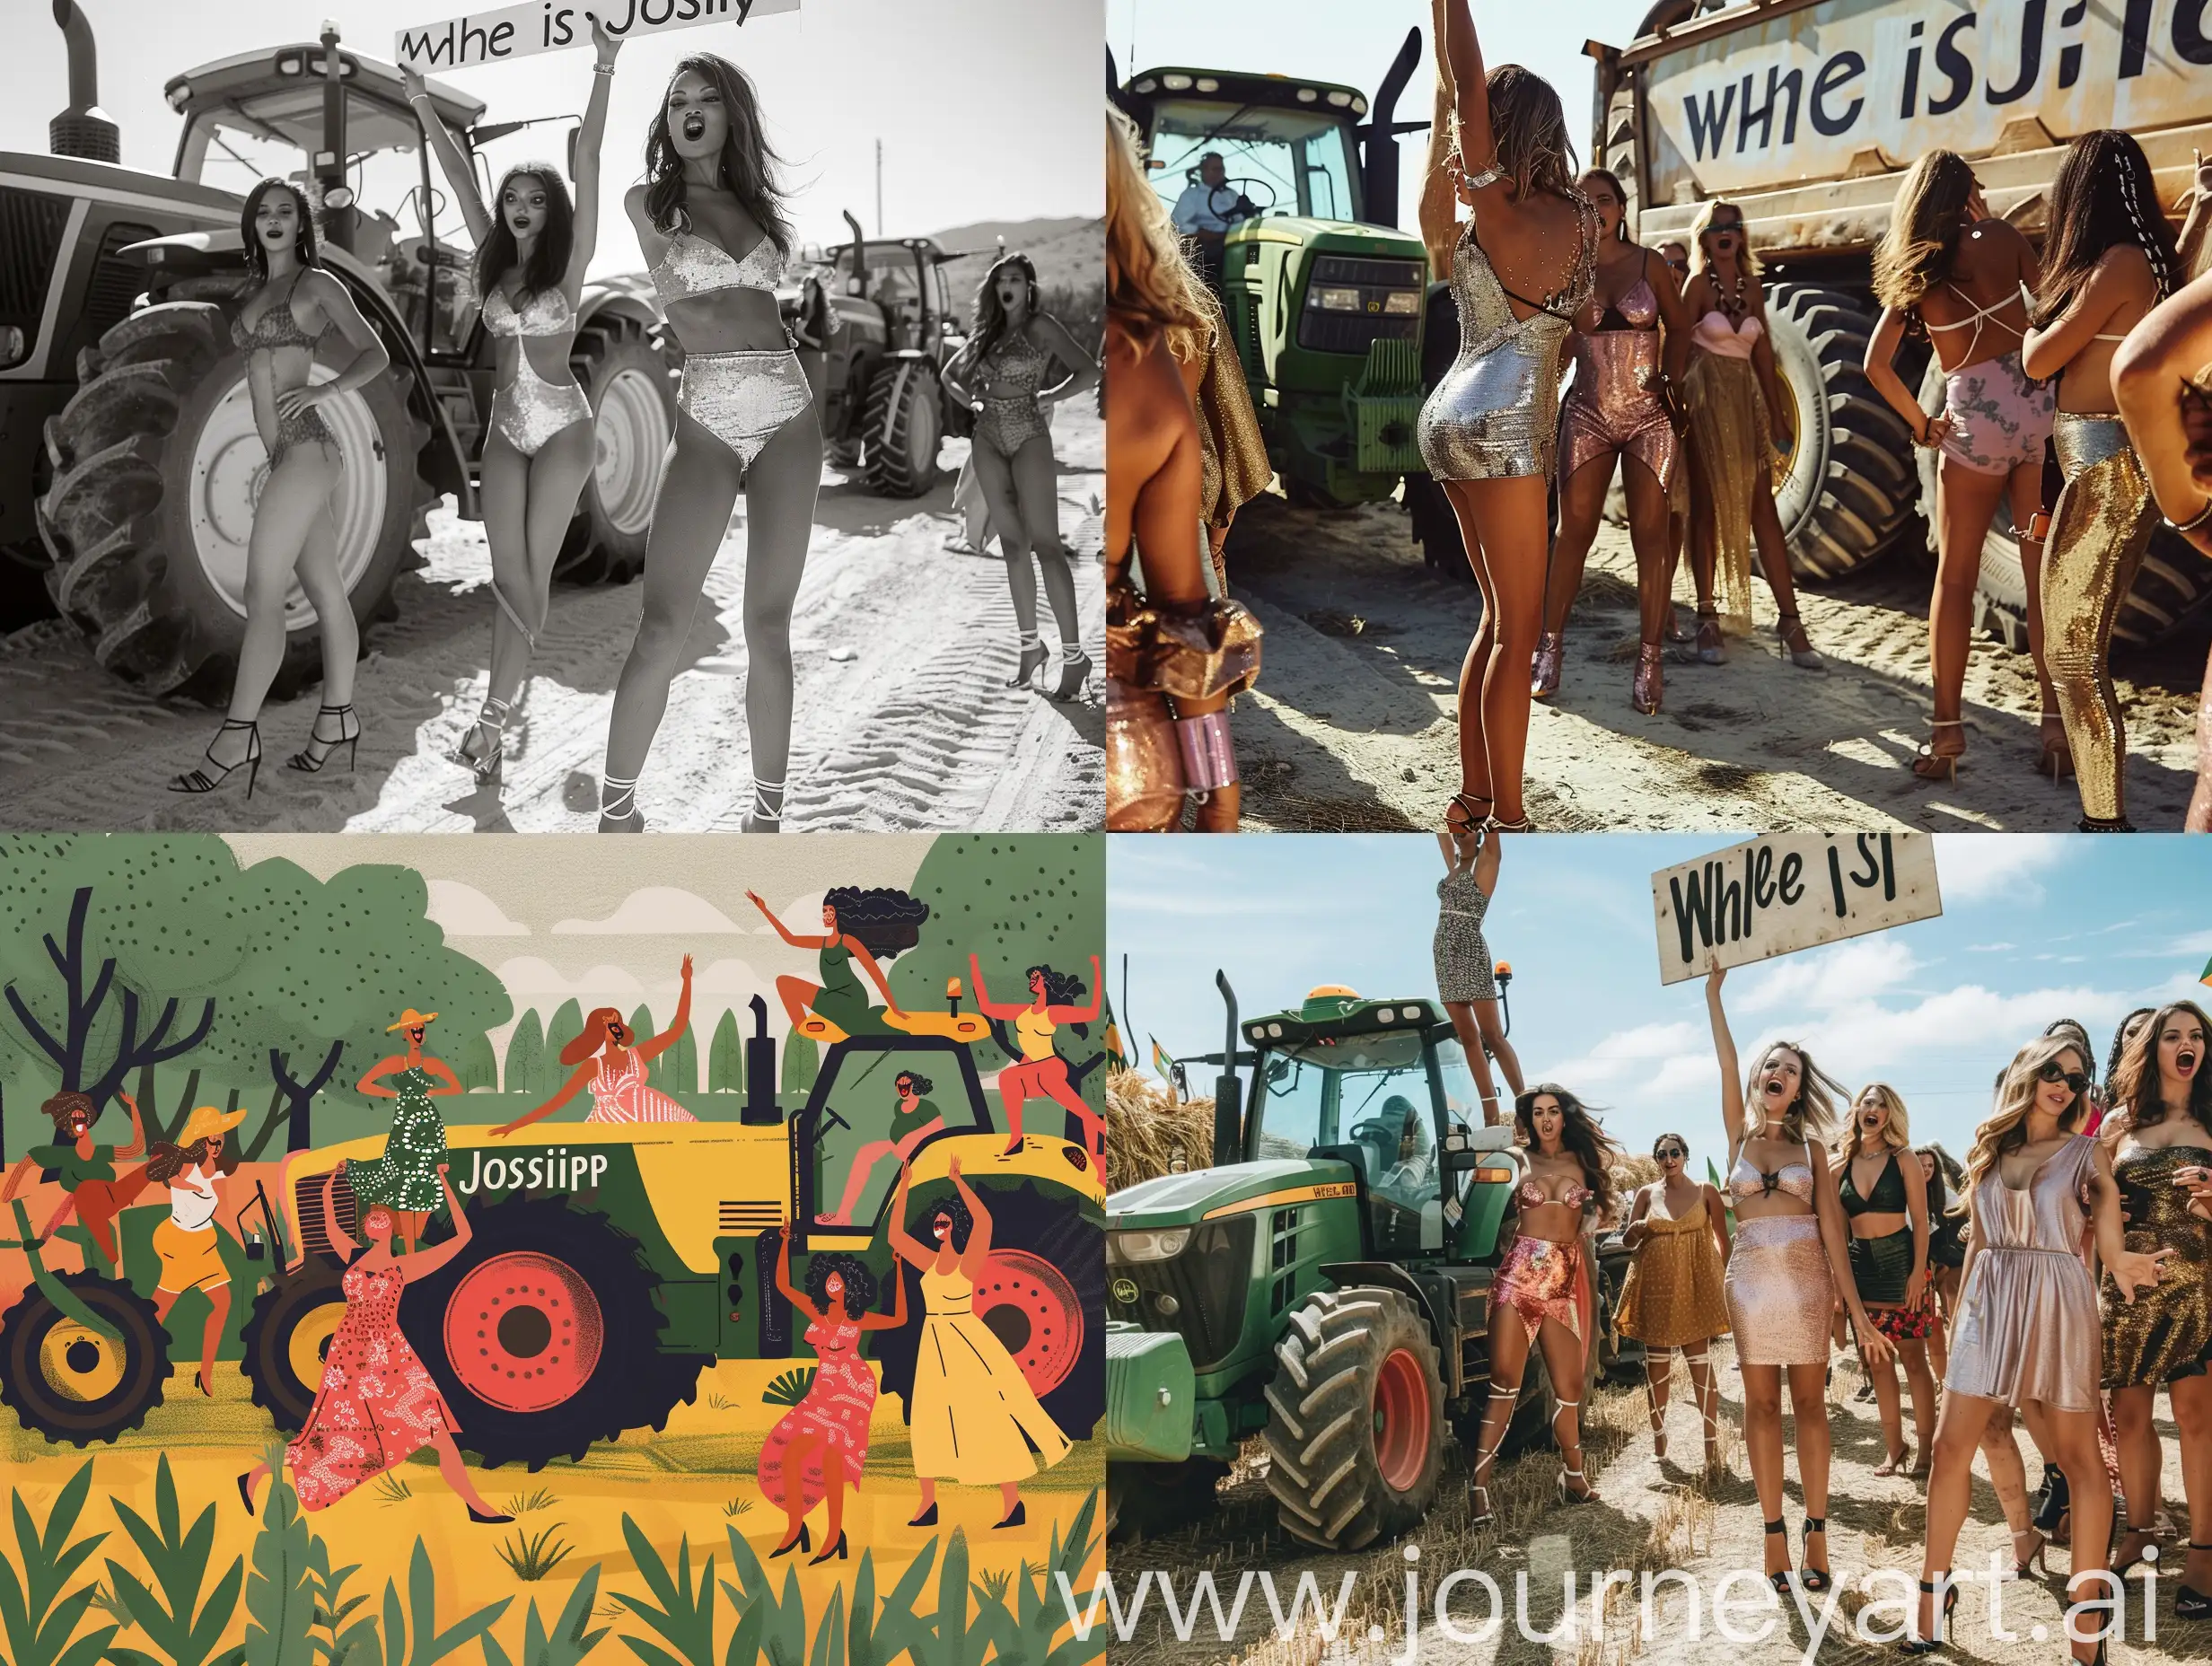 Brazilian-Women-in-Elegant-Dresses-and-Heels-Protesting-Near-Tractors